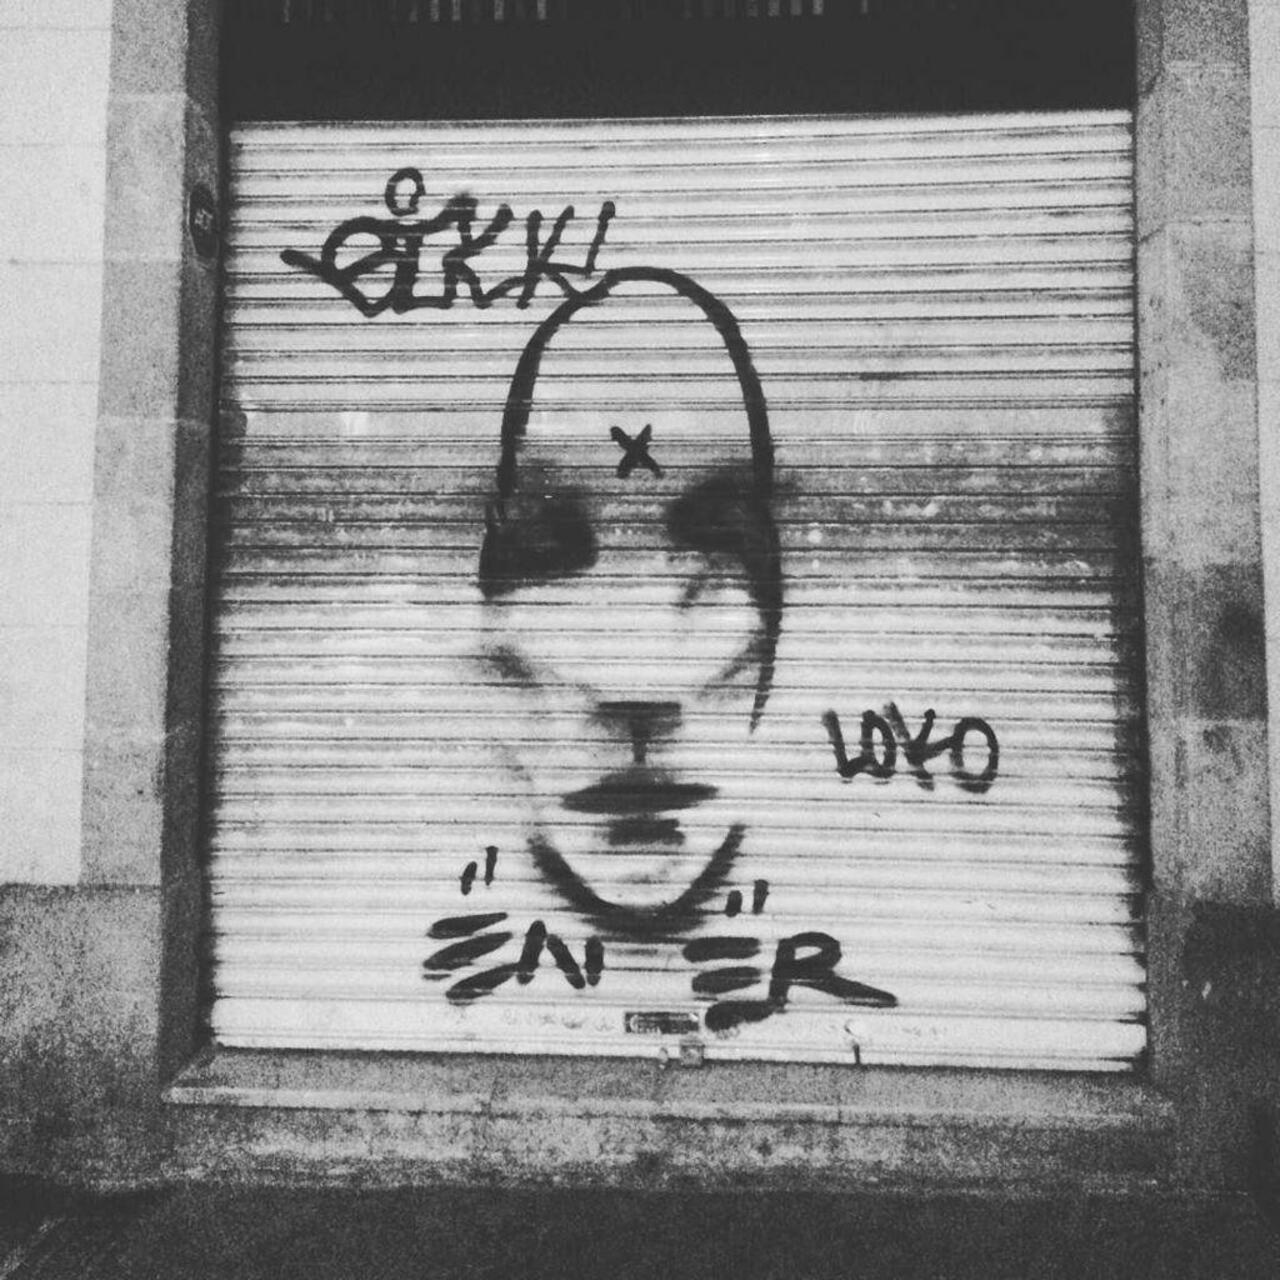 #streetart #onmyway #graffiti #art #arte #urbano #urbanart #efimero #instagraffiti #instaart #instastreetart #barce… http://t.co/2w1y0gP6vF